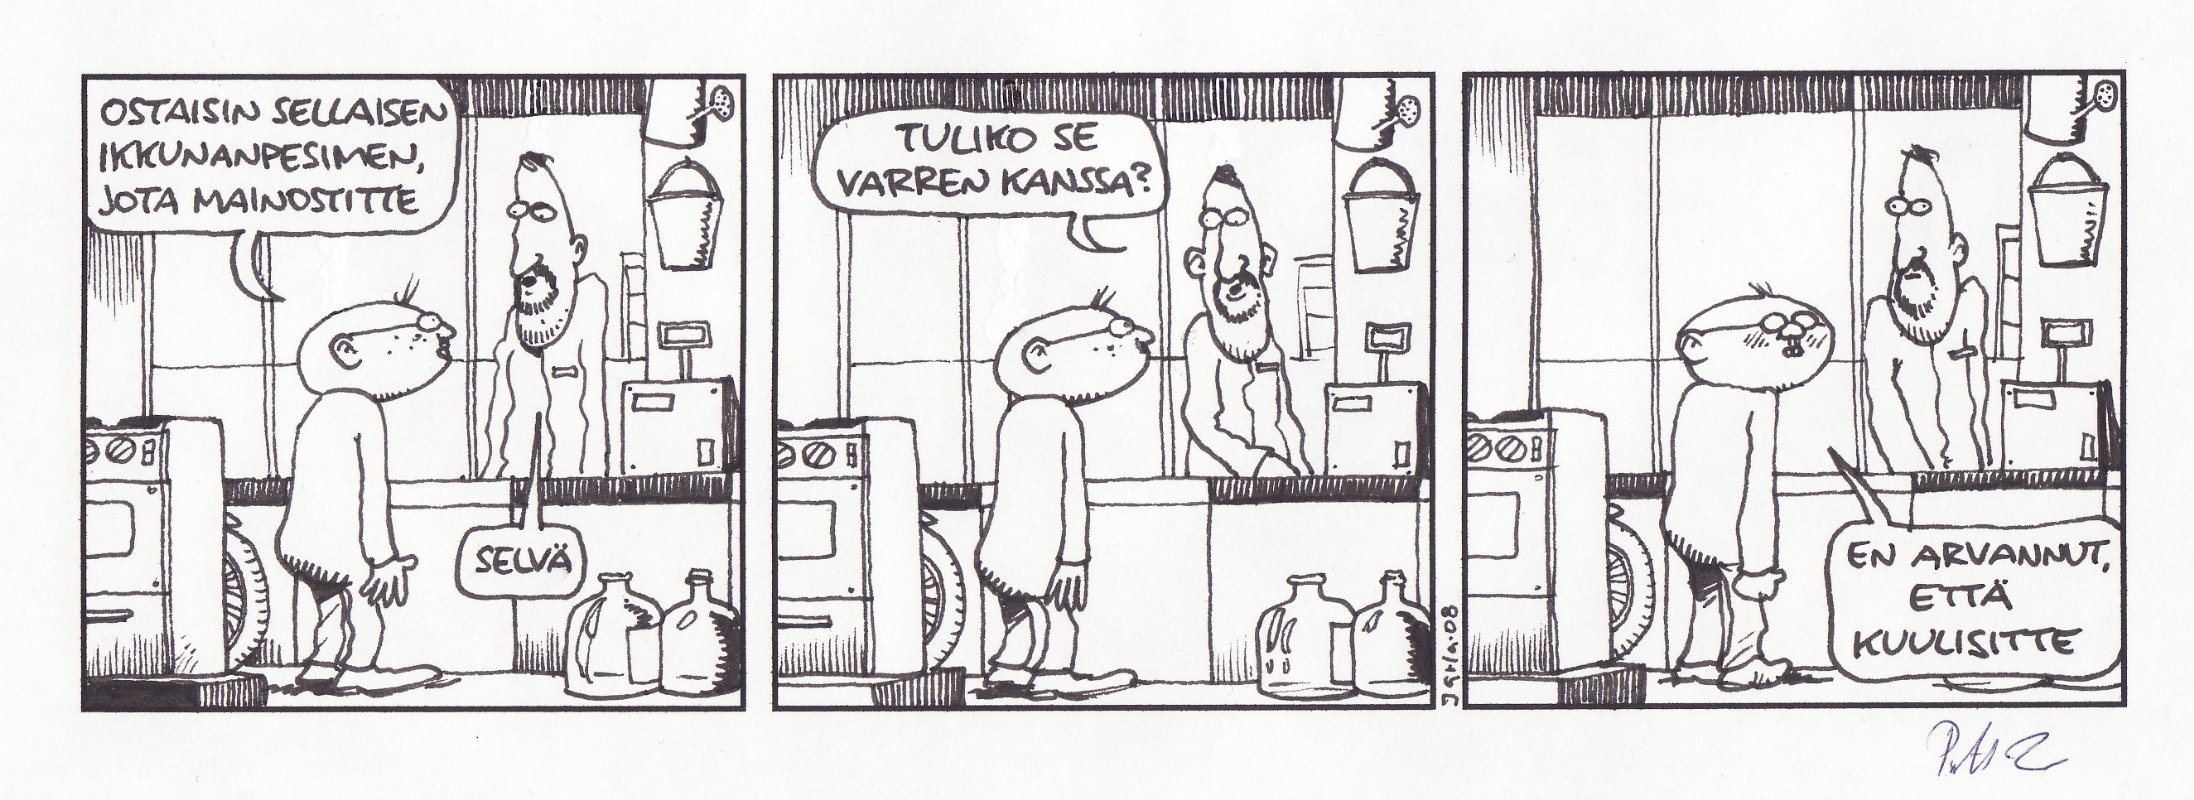 Fingerpori daily #468 (2008) by Pertti Jarla, in Jyrki Vanakoski's Finnish  comic strips and cartoons Comic Art Gallery Room